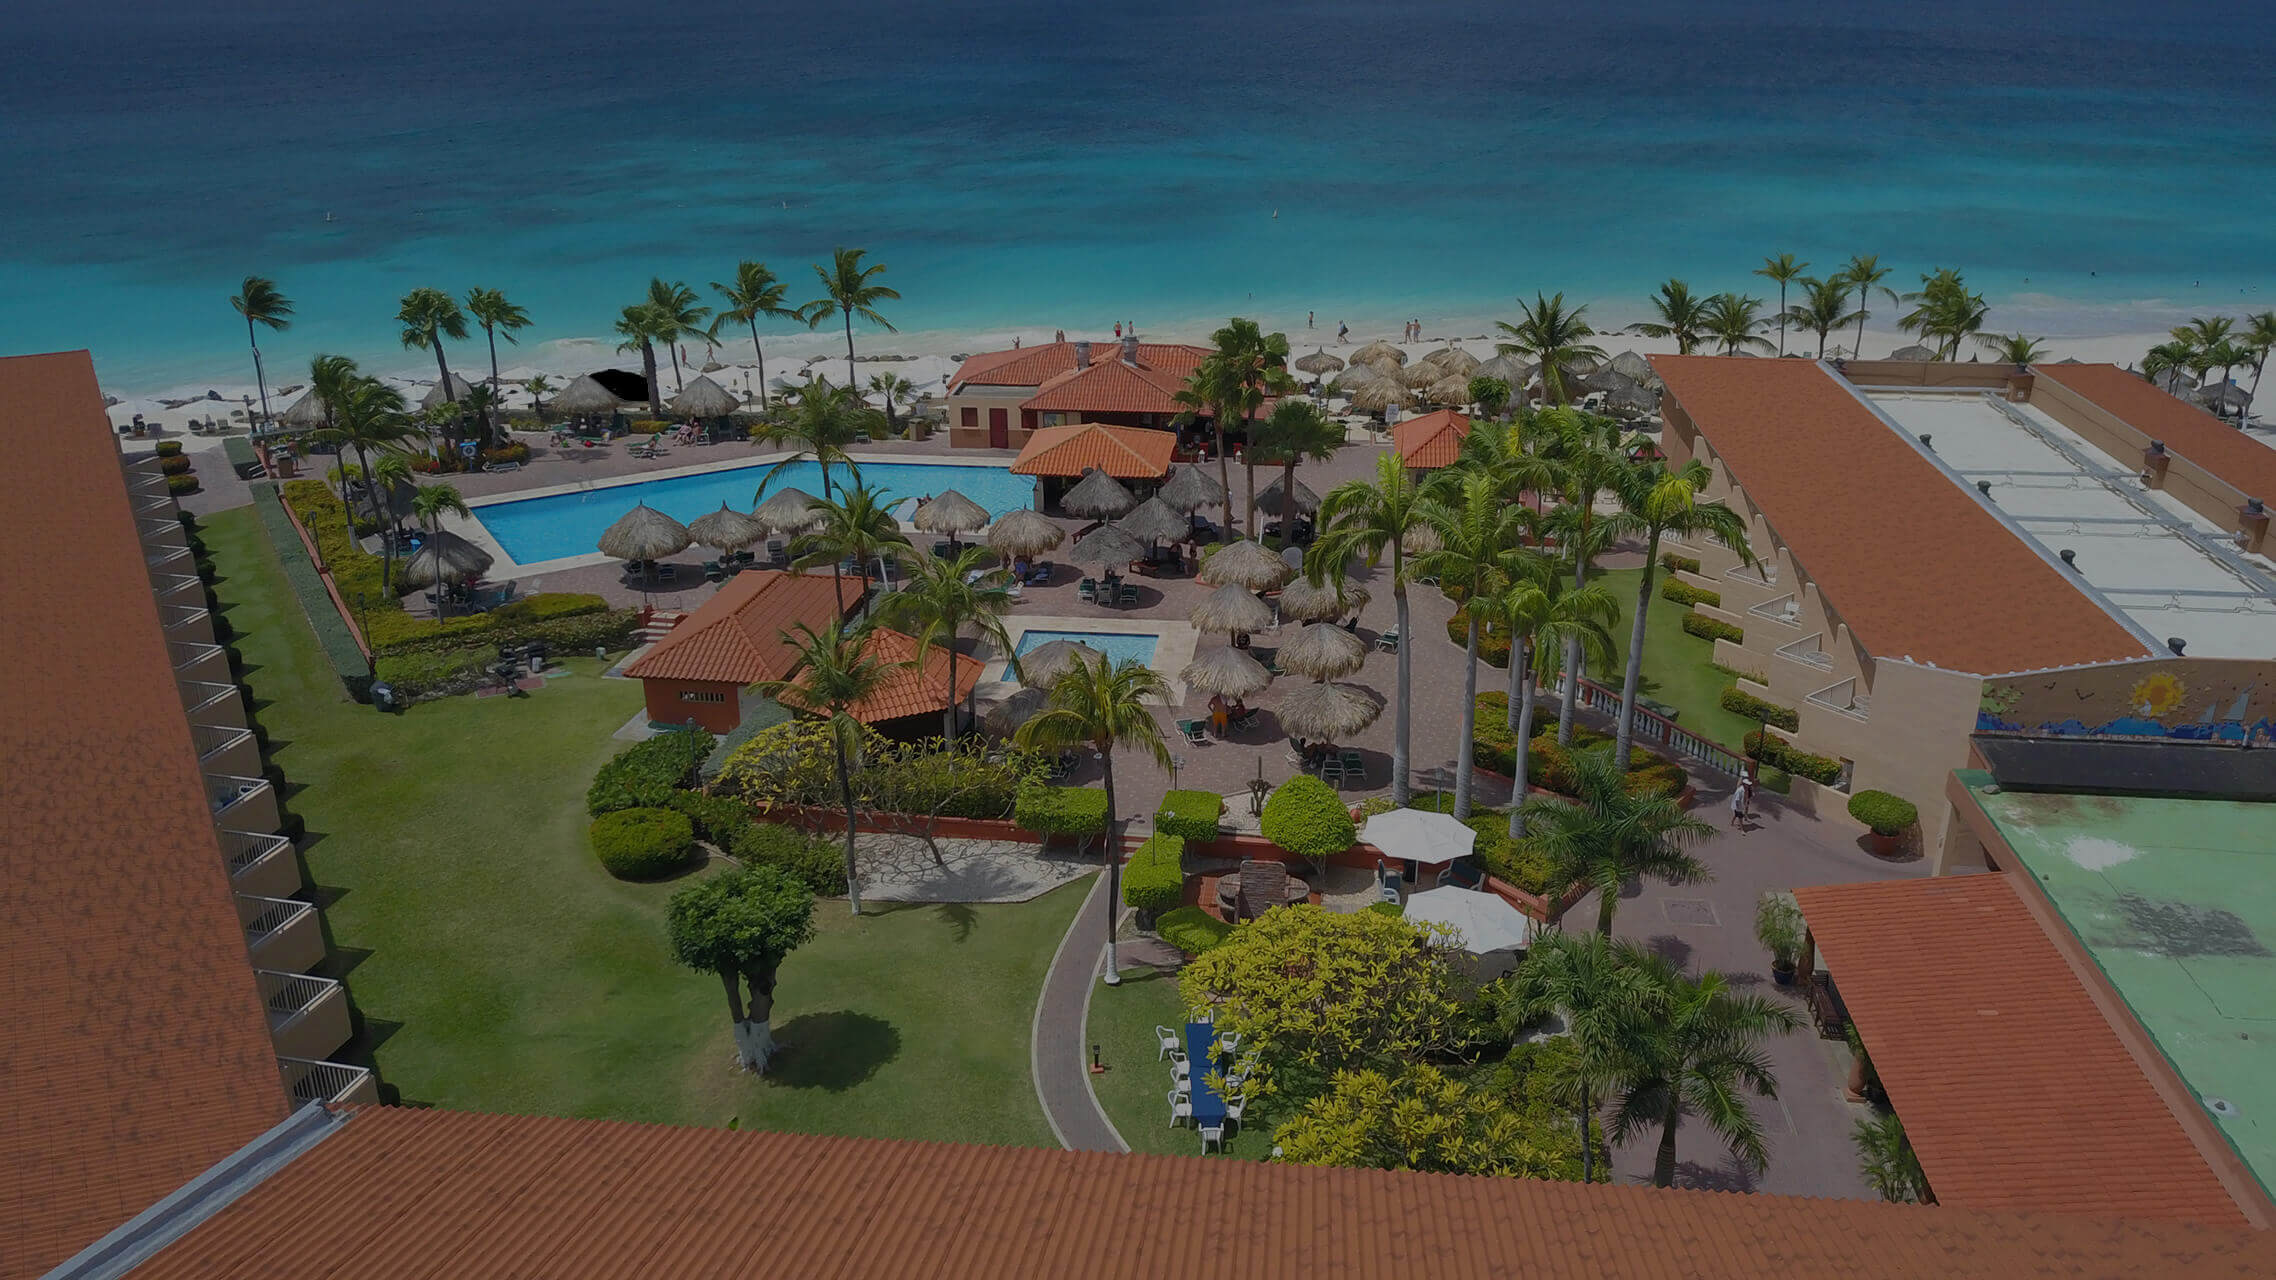 Aruba Beach Club: A Luxurious Destination for Your Next Island Getaway